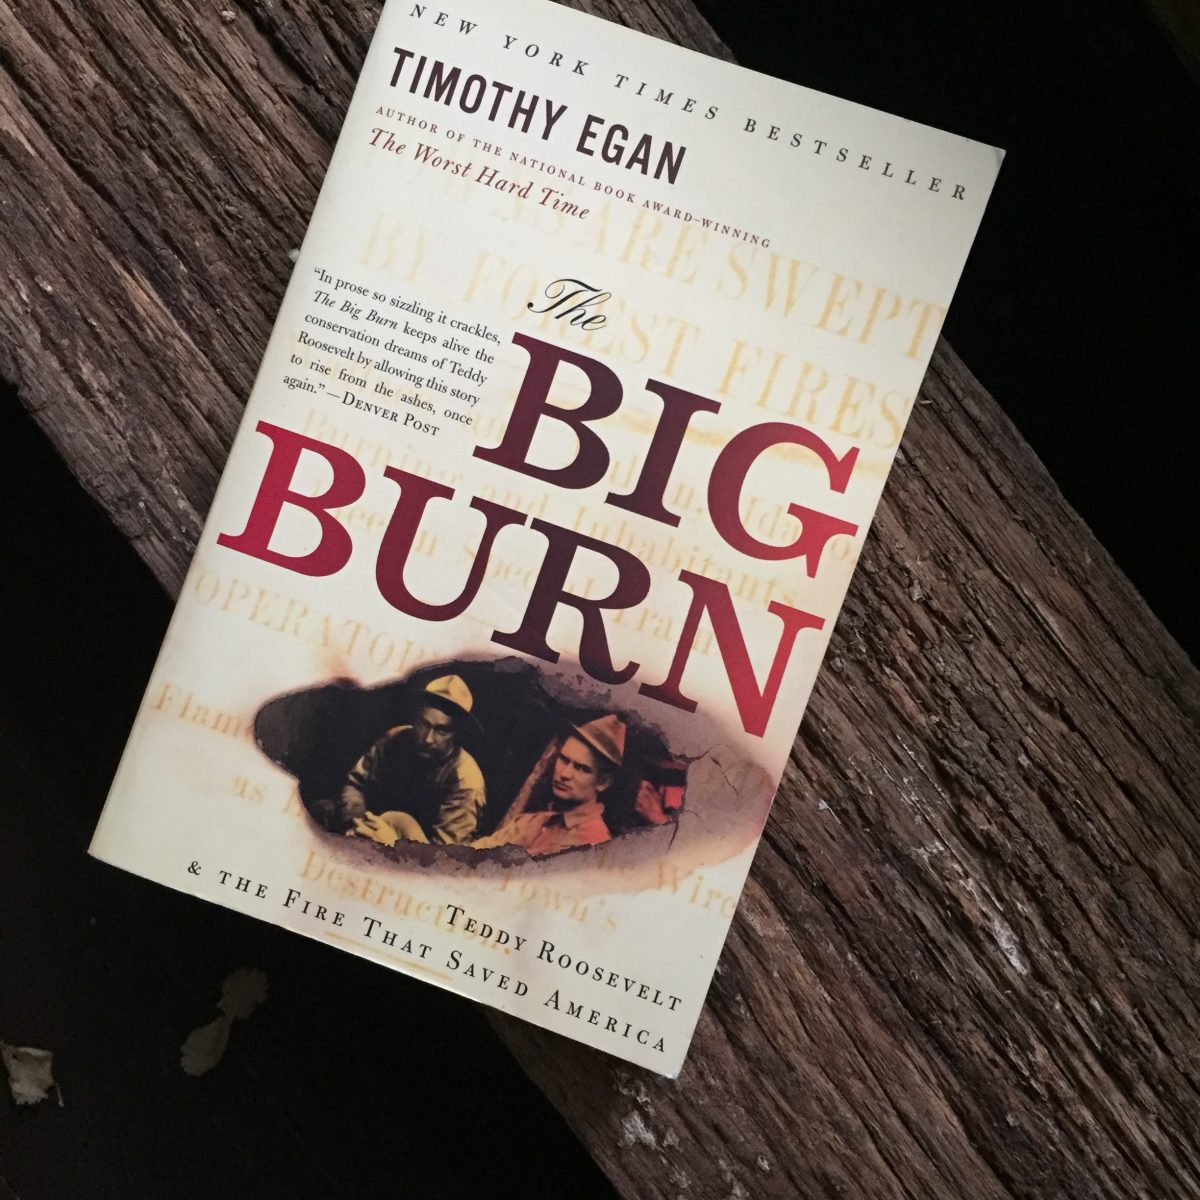 A book titiled The Big Burn